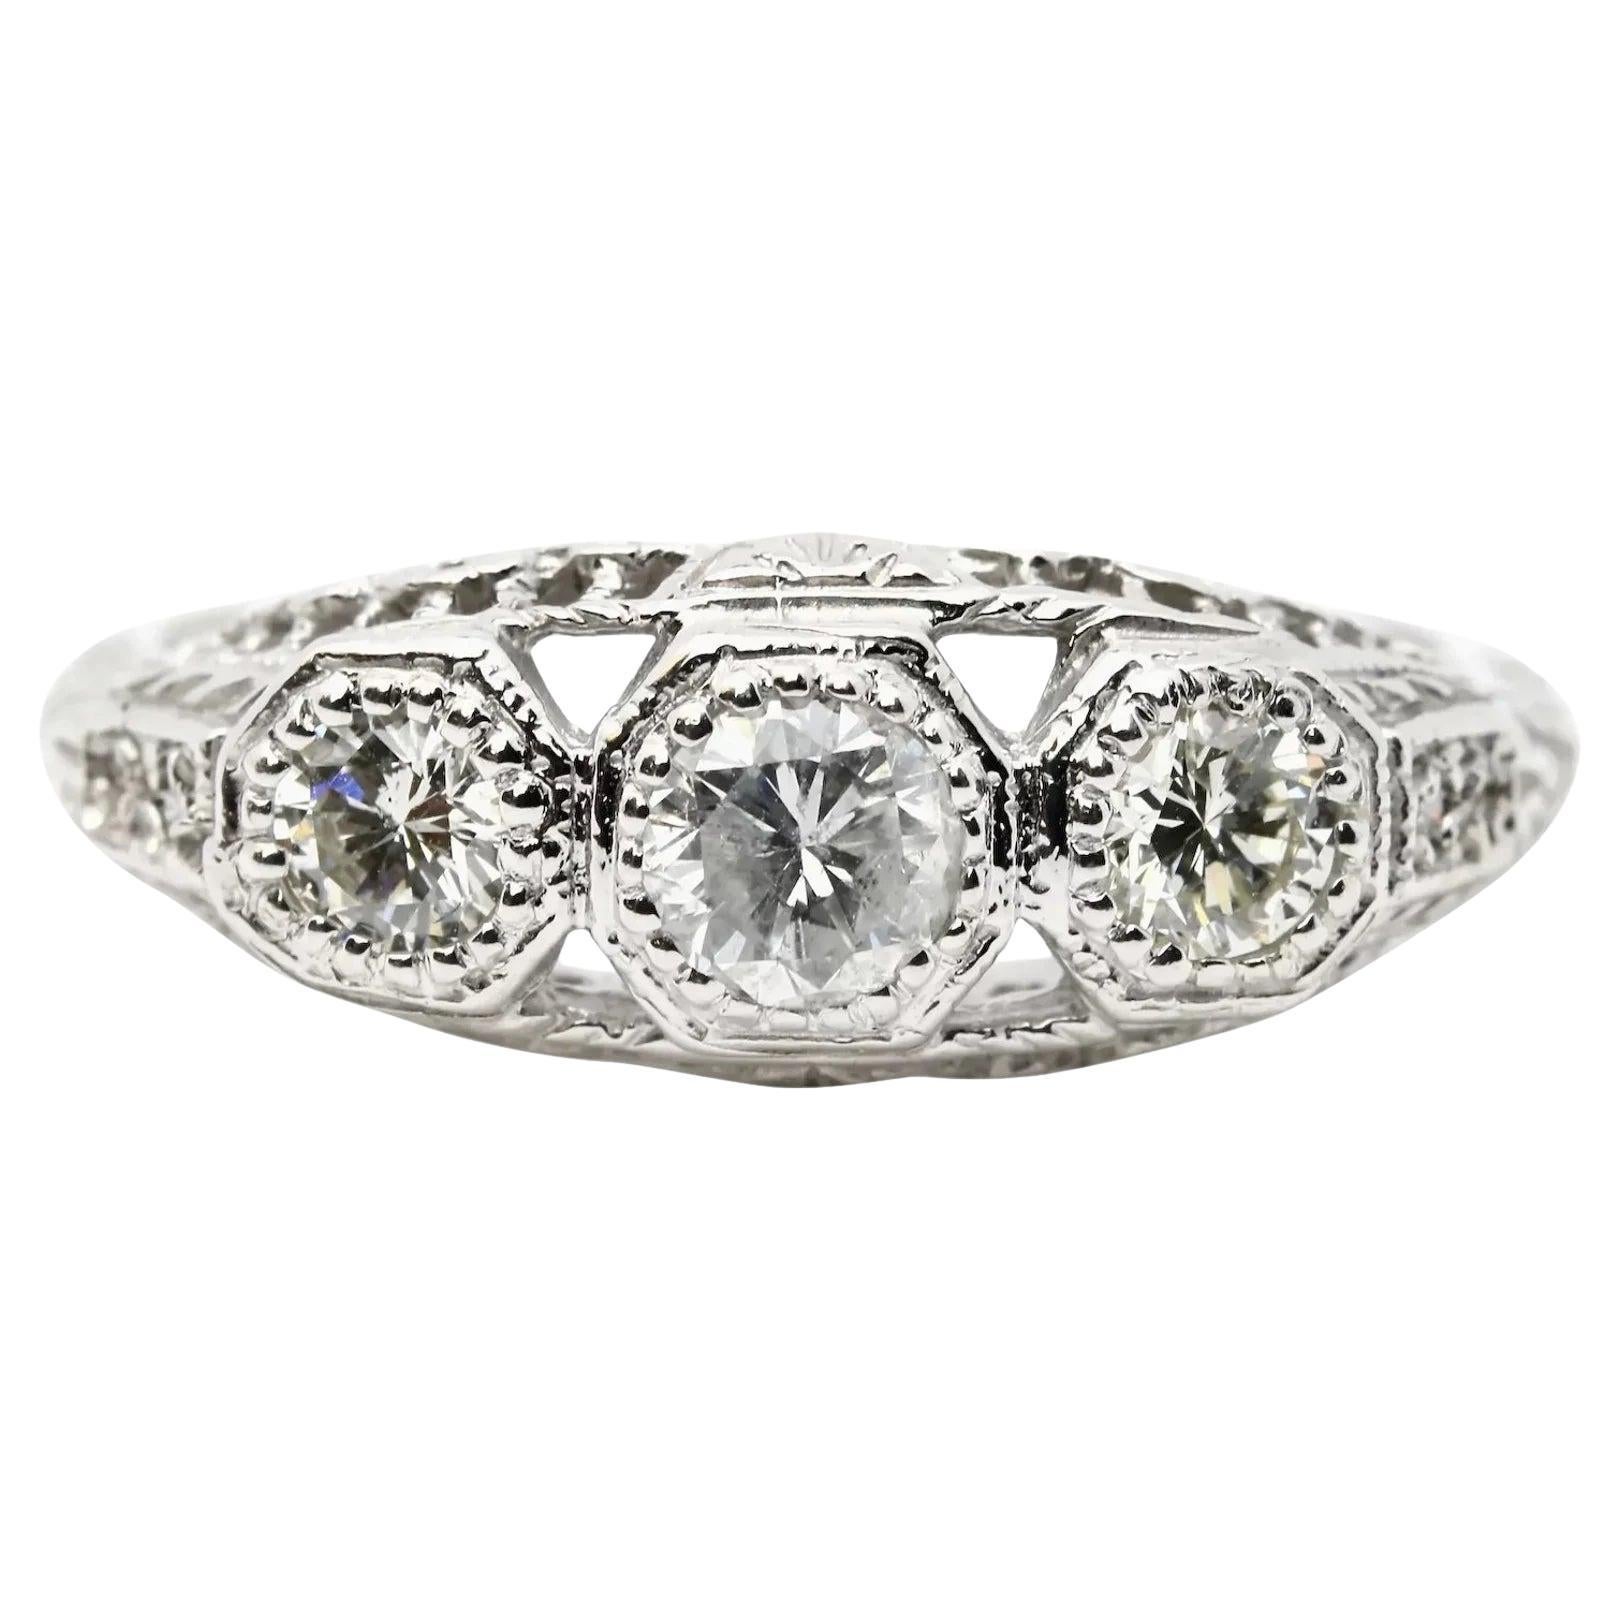 Floral Art Deco 0.80ctw Three Stone Diamond Ring in 18K White Gold